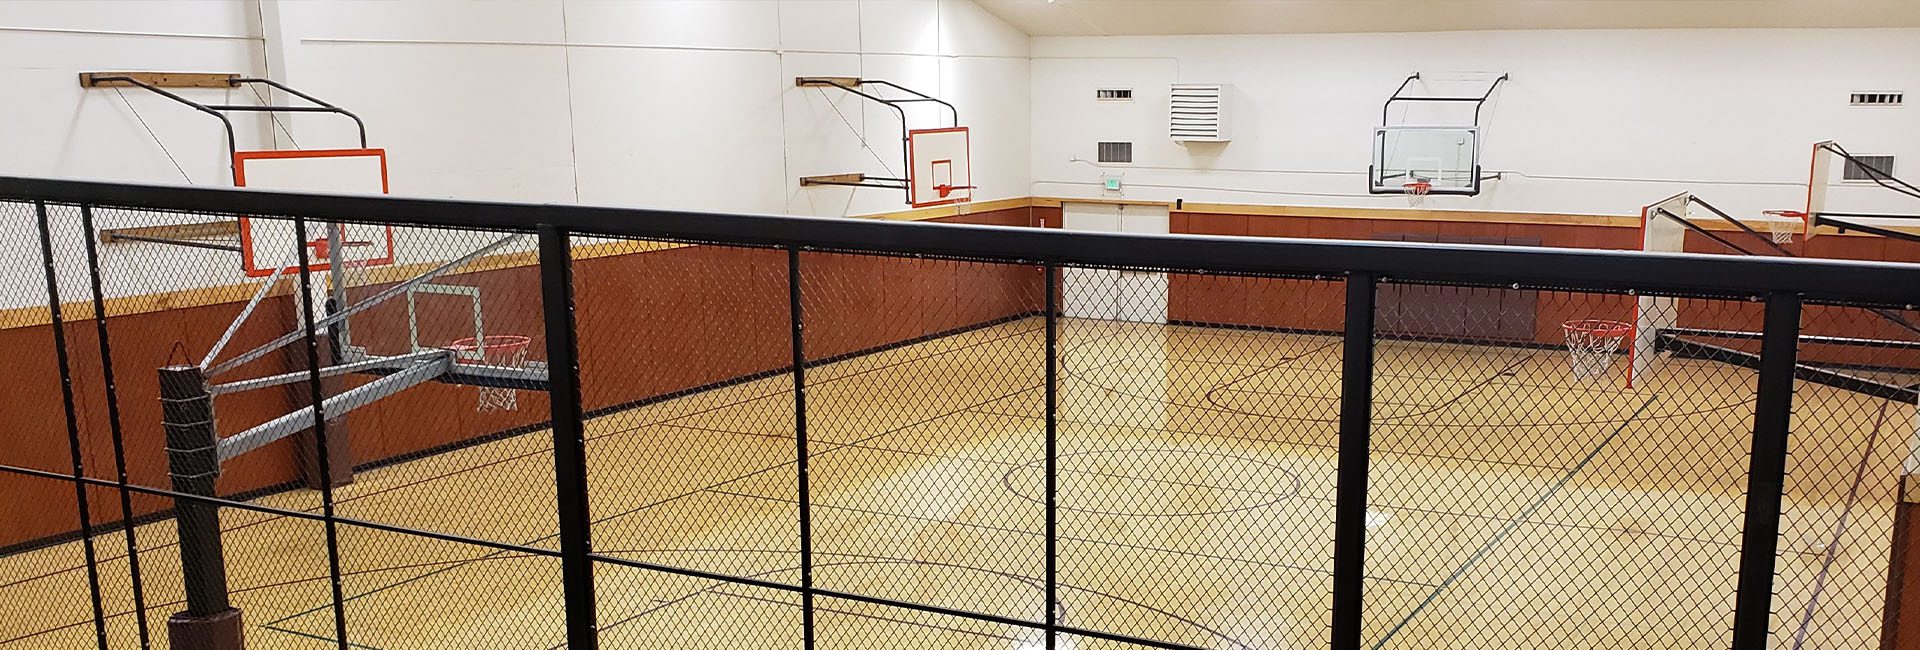 indoor basketball/volleyball court